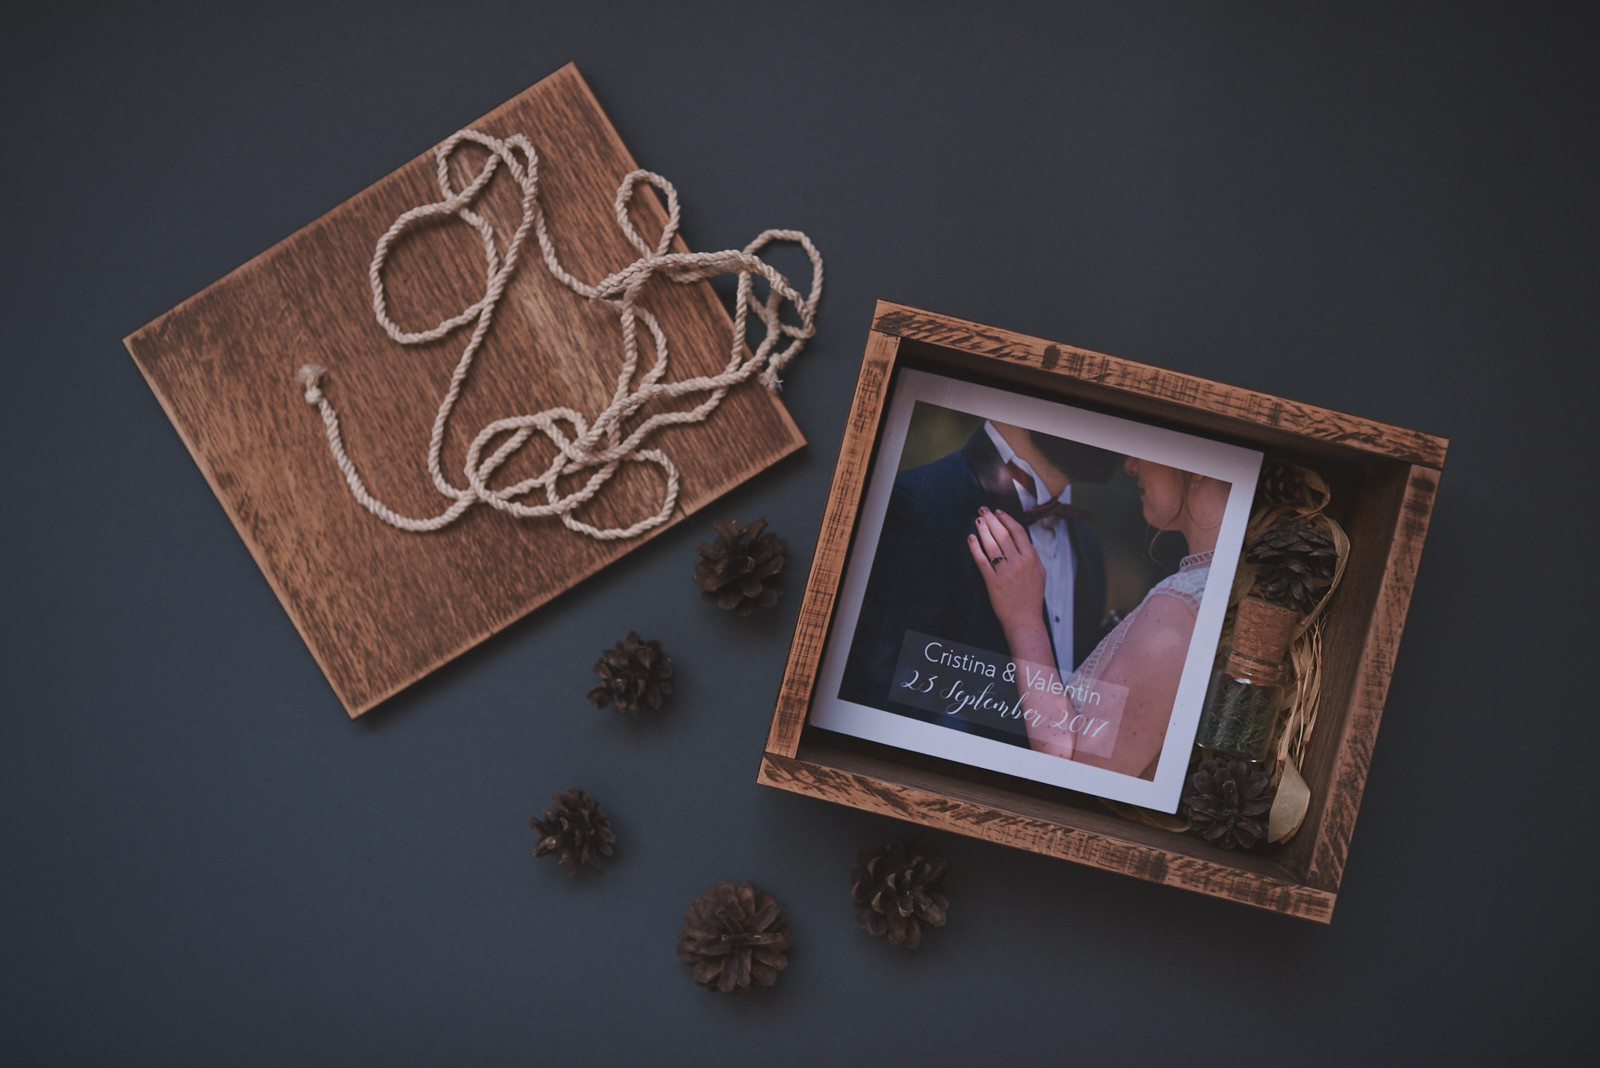 Handmade wooden Oak Box with a printed photo album